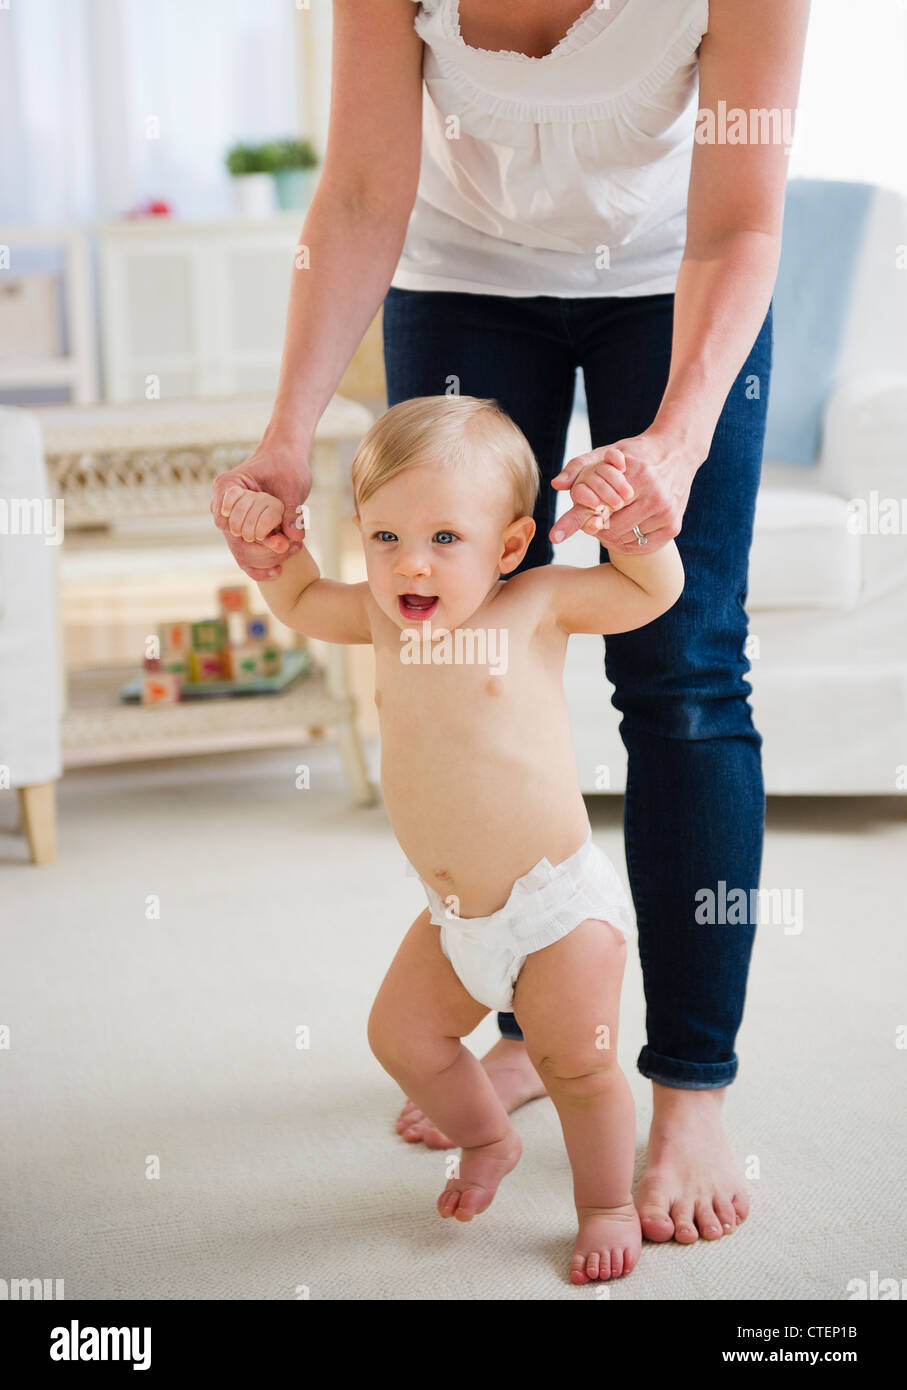 baby walking at 11 months